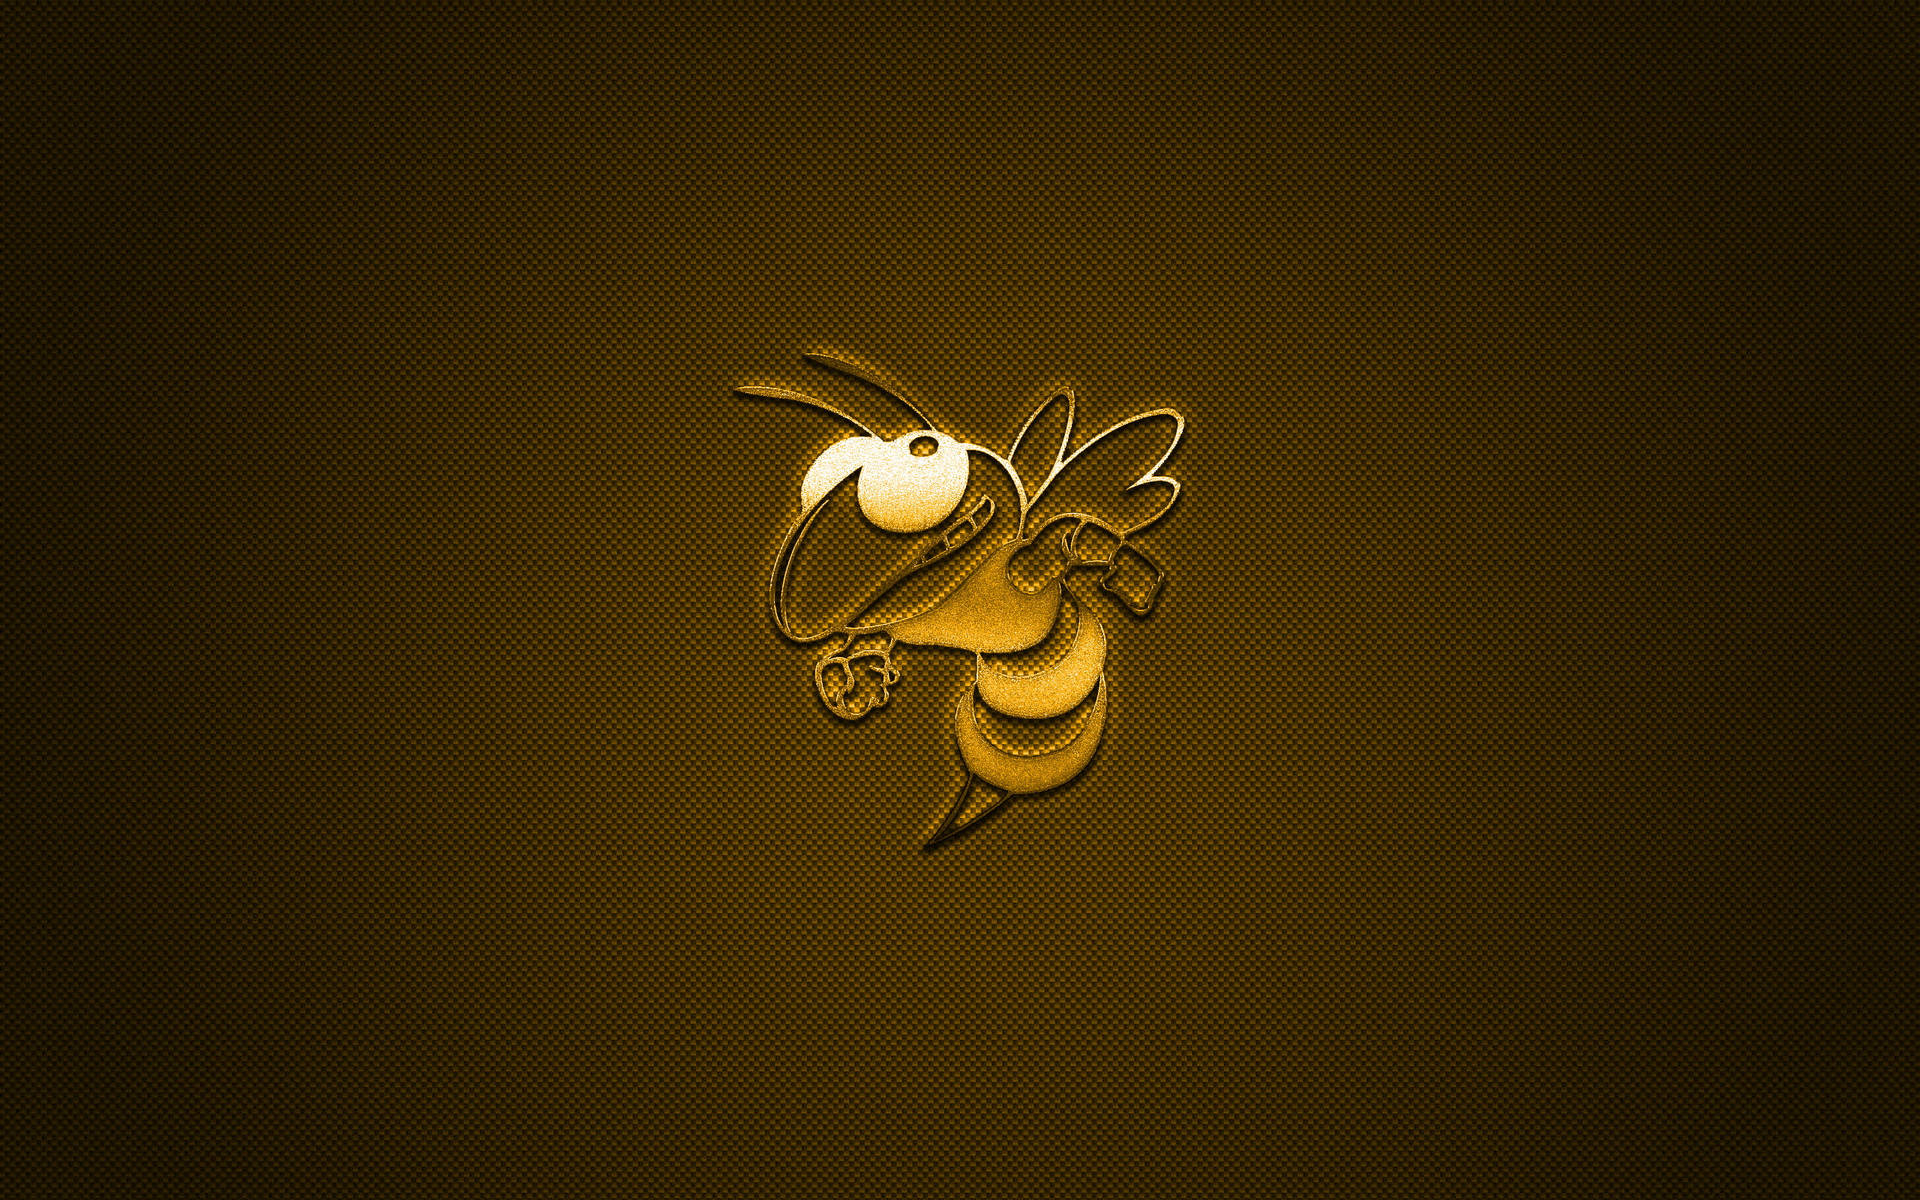 Georgia Tech's Iconic Bee Artwork Wallpaper